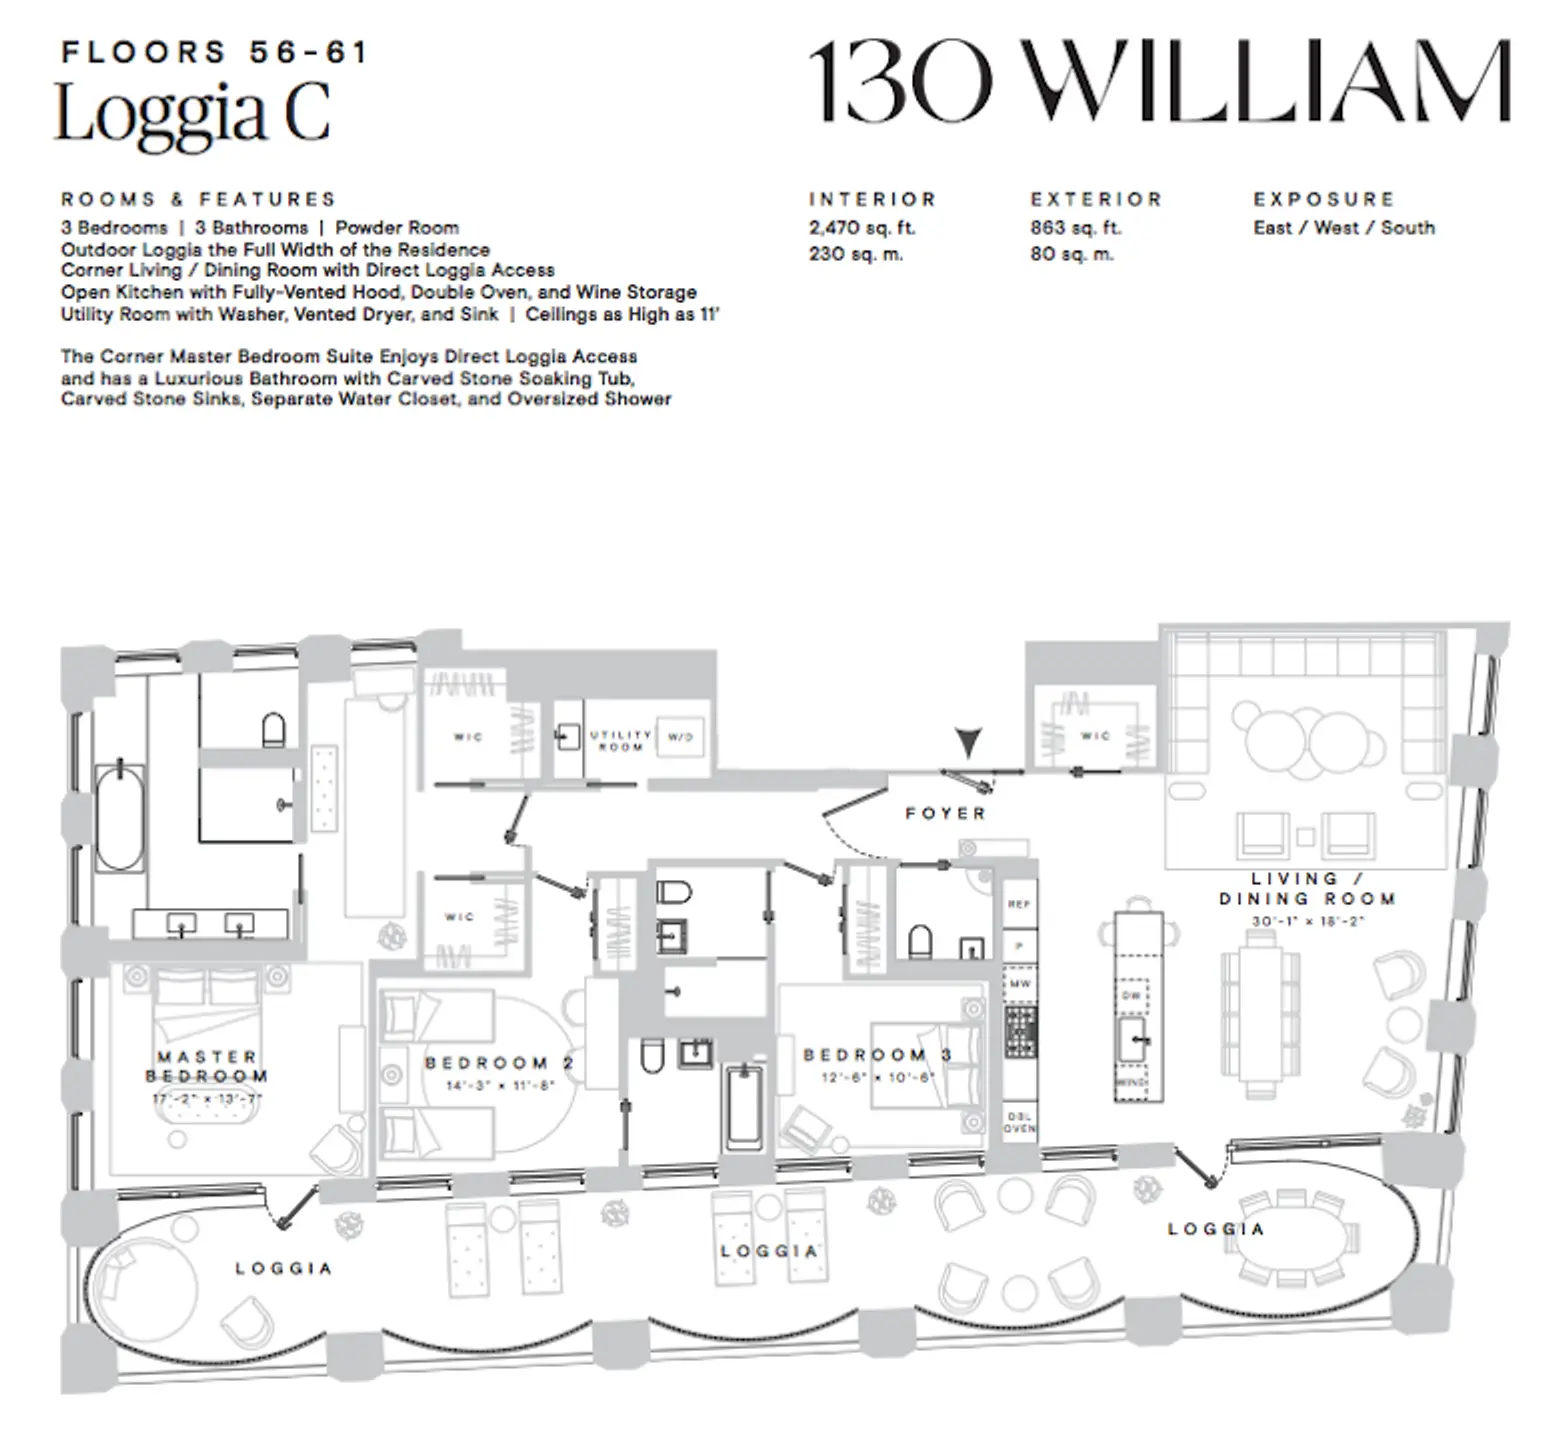 130 William, 130 William Street, David Adjaye